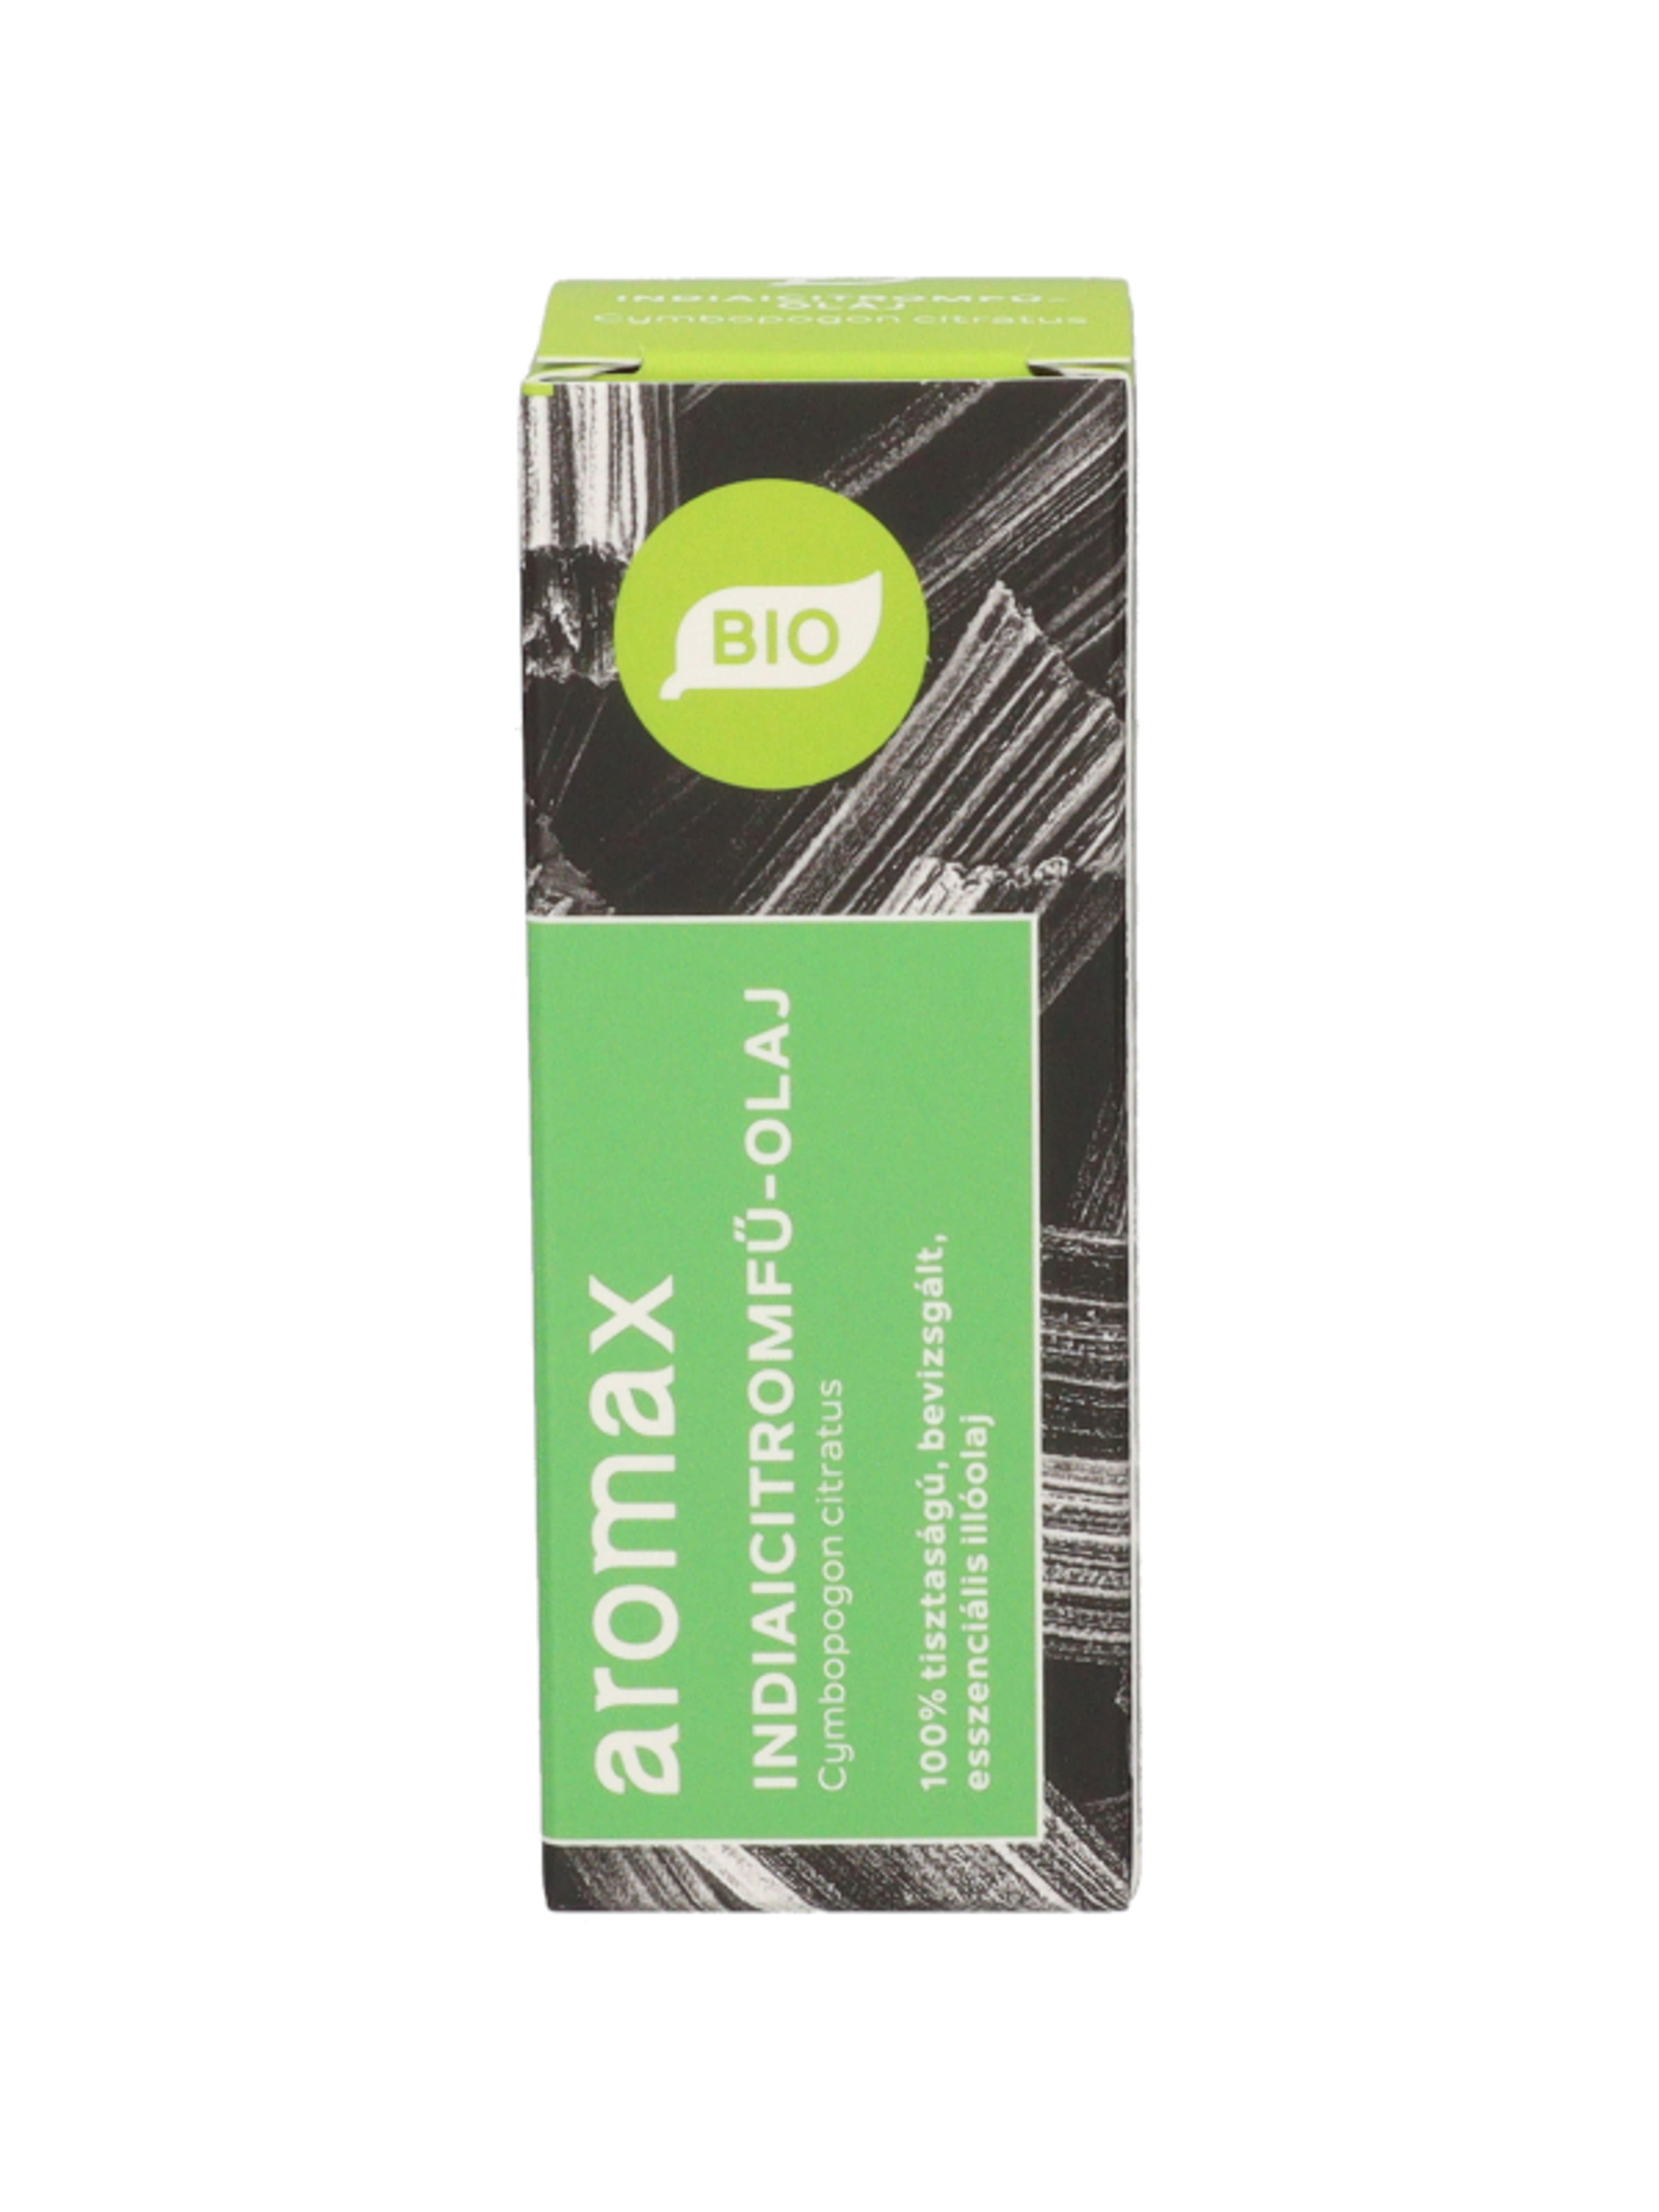 Aromax Bio Indiai citromfűolaj - 10 ml